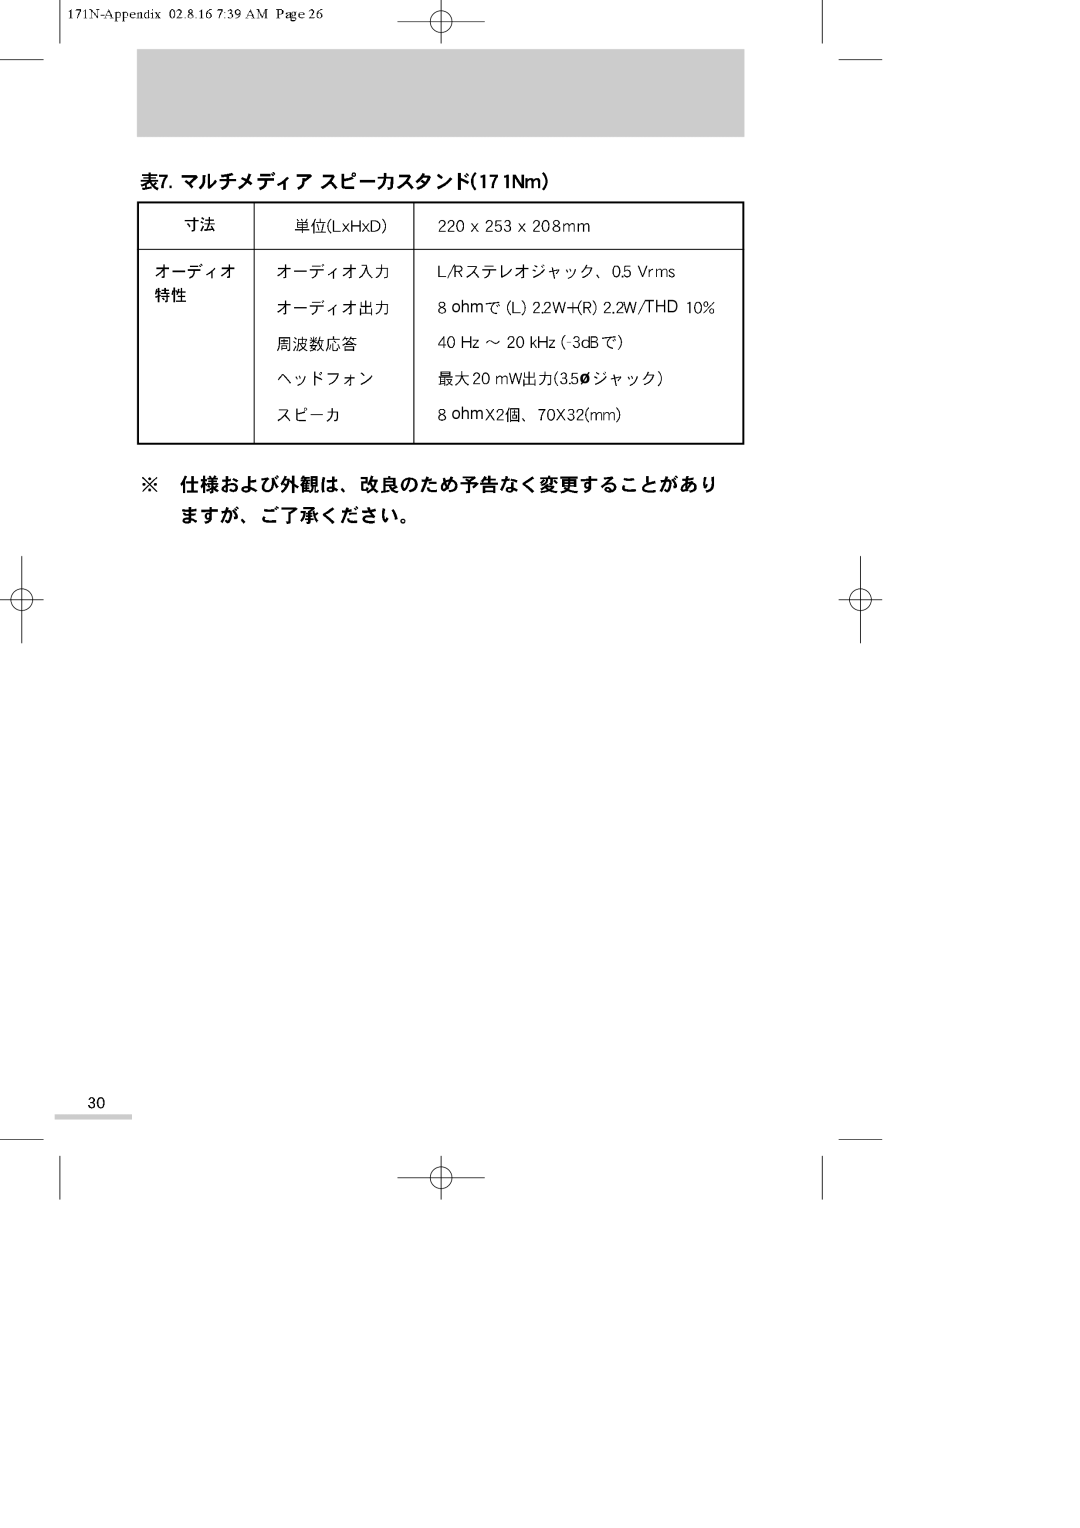 Samsung GH17ASMN/XSJ manual ohmTHD 